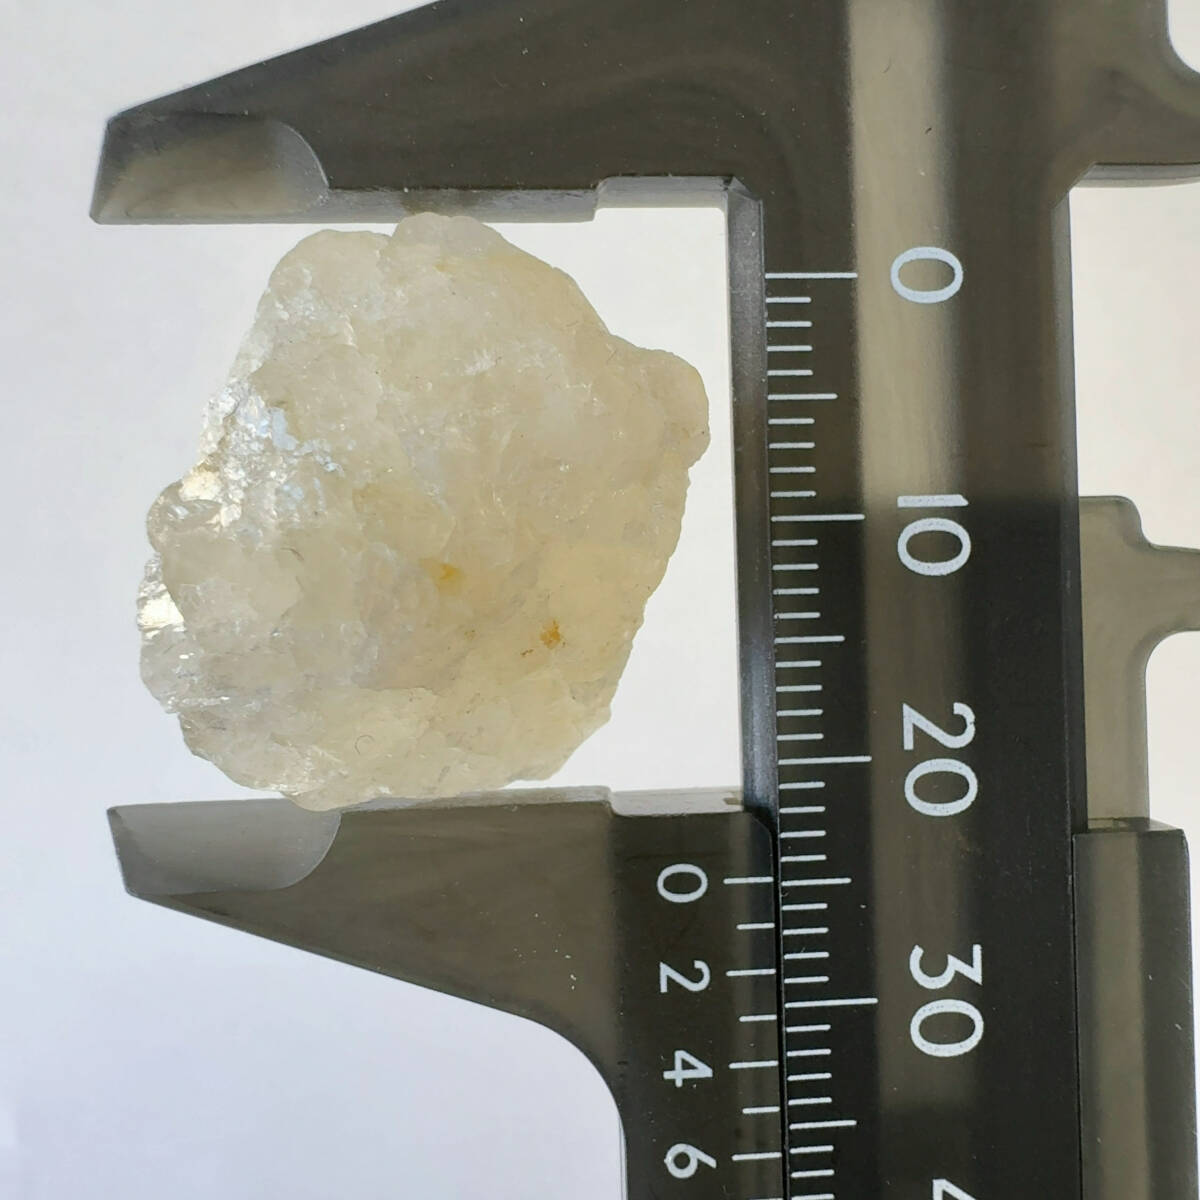 【E24049】 アンブリゴナイト アンブリゴ石 天然石 原石 鉱物 パワーストーン_画像1